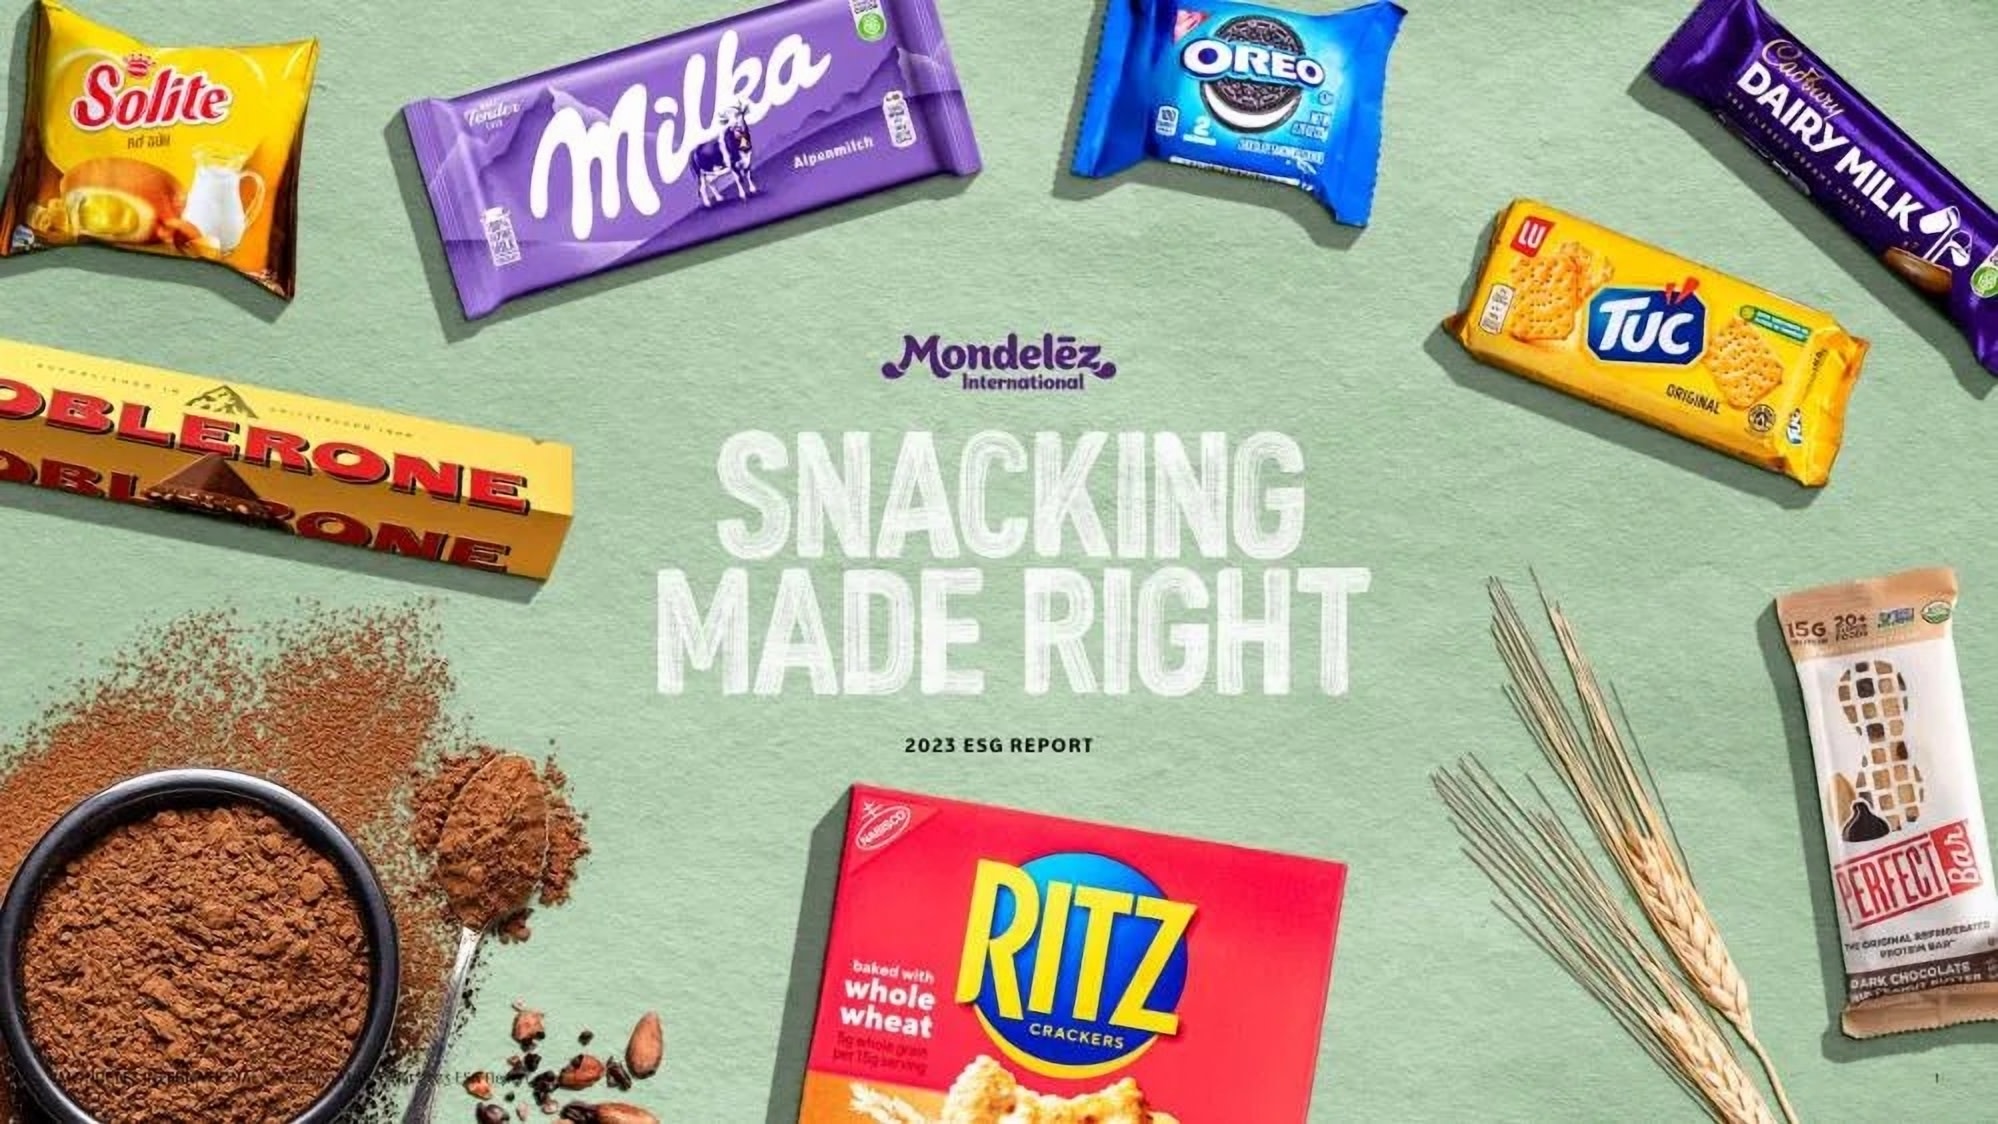 Mondelēz International's 2023 Snacking Made Right Report